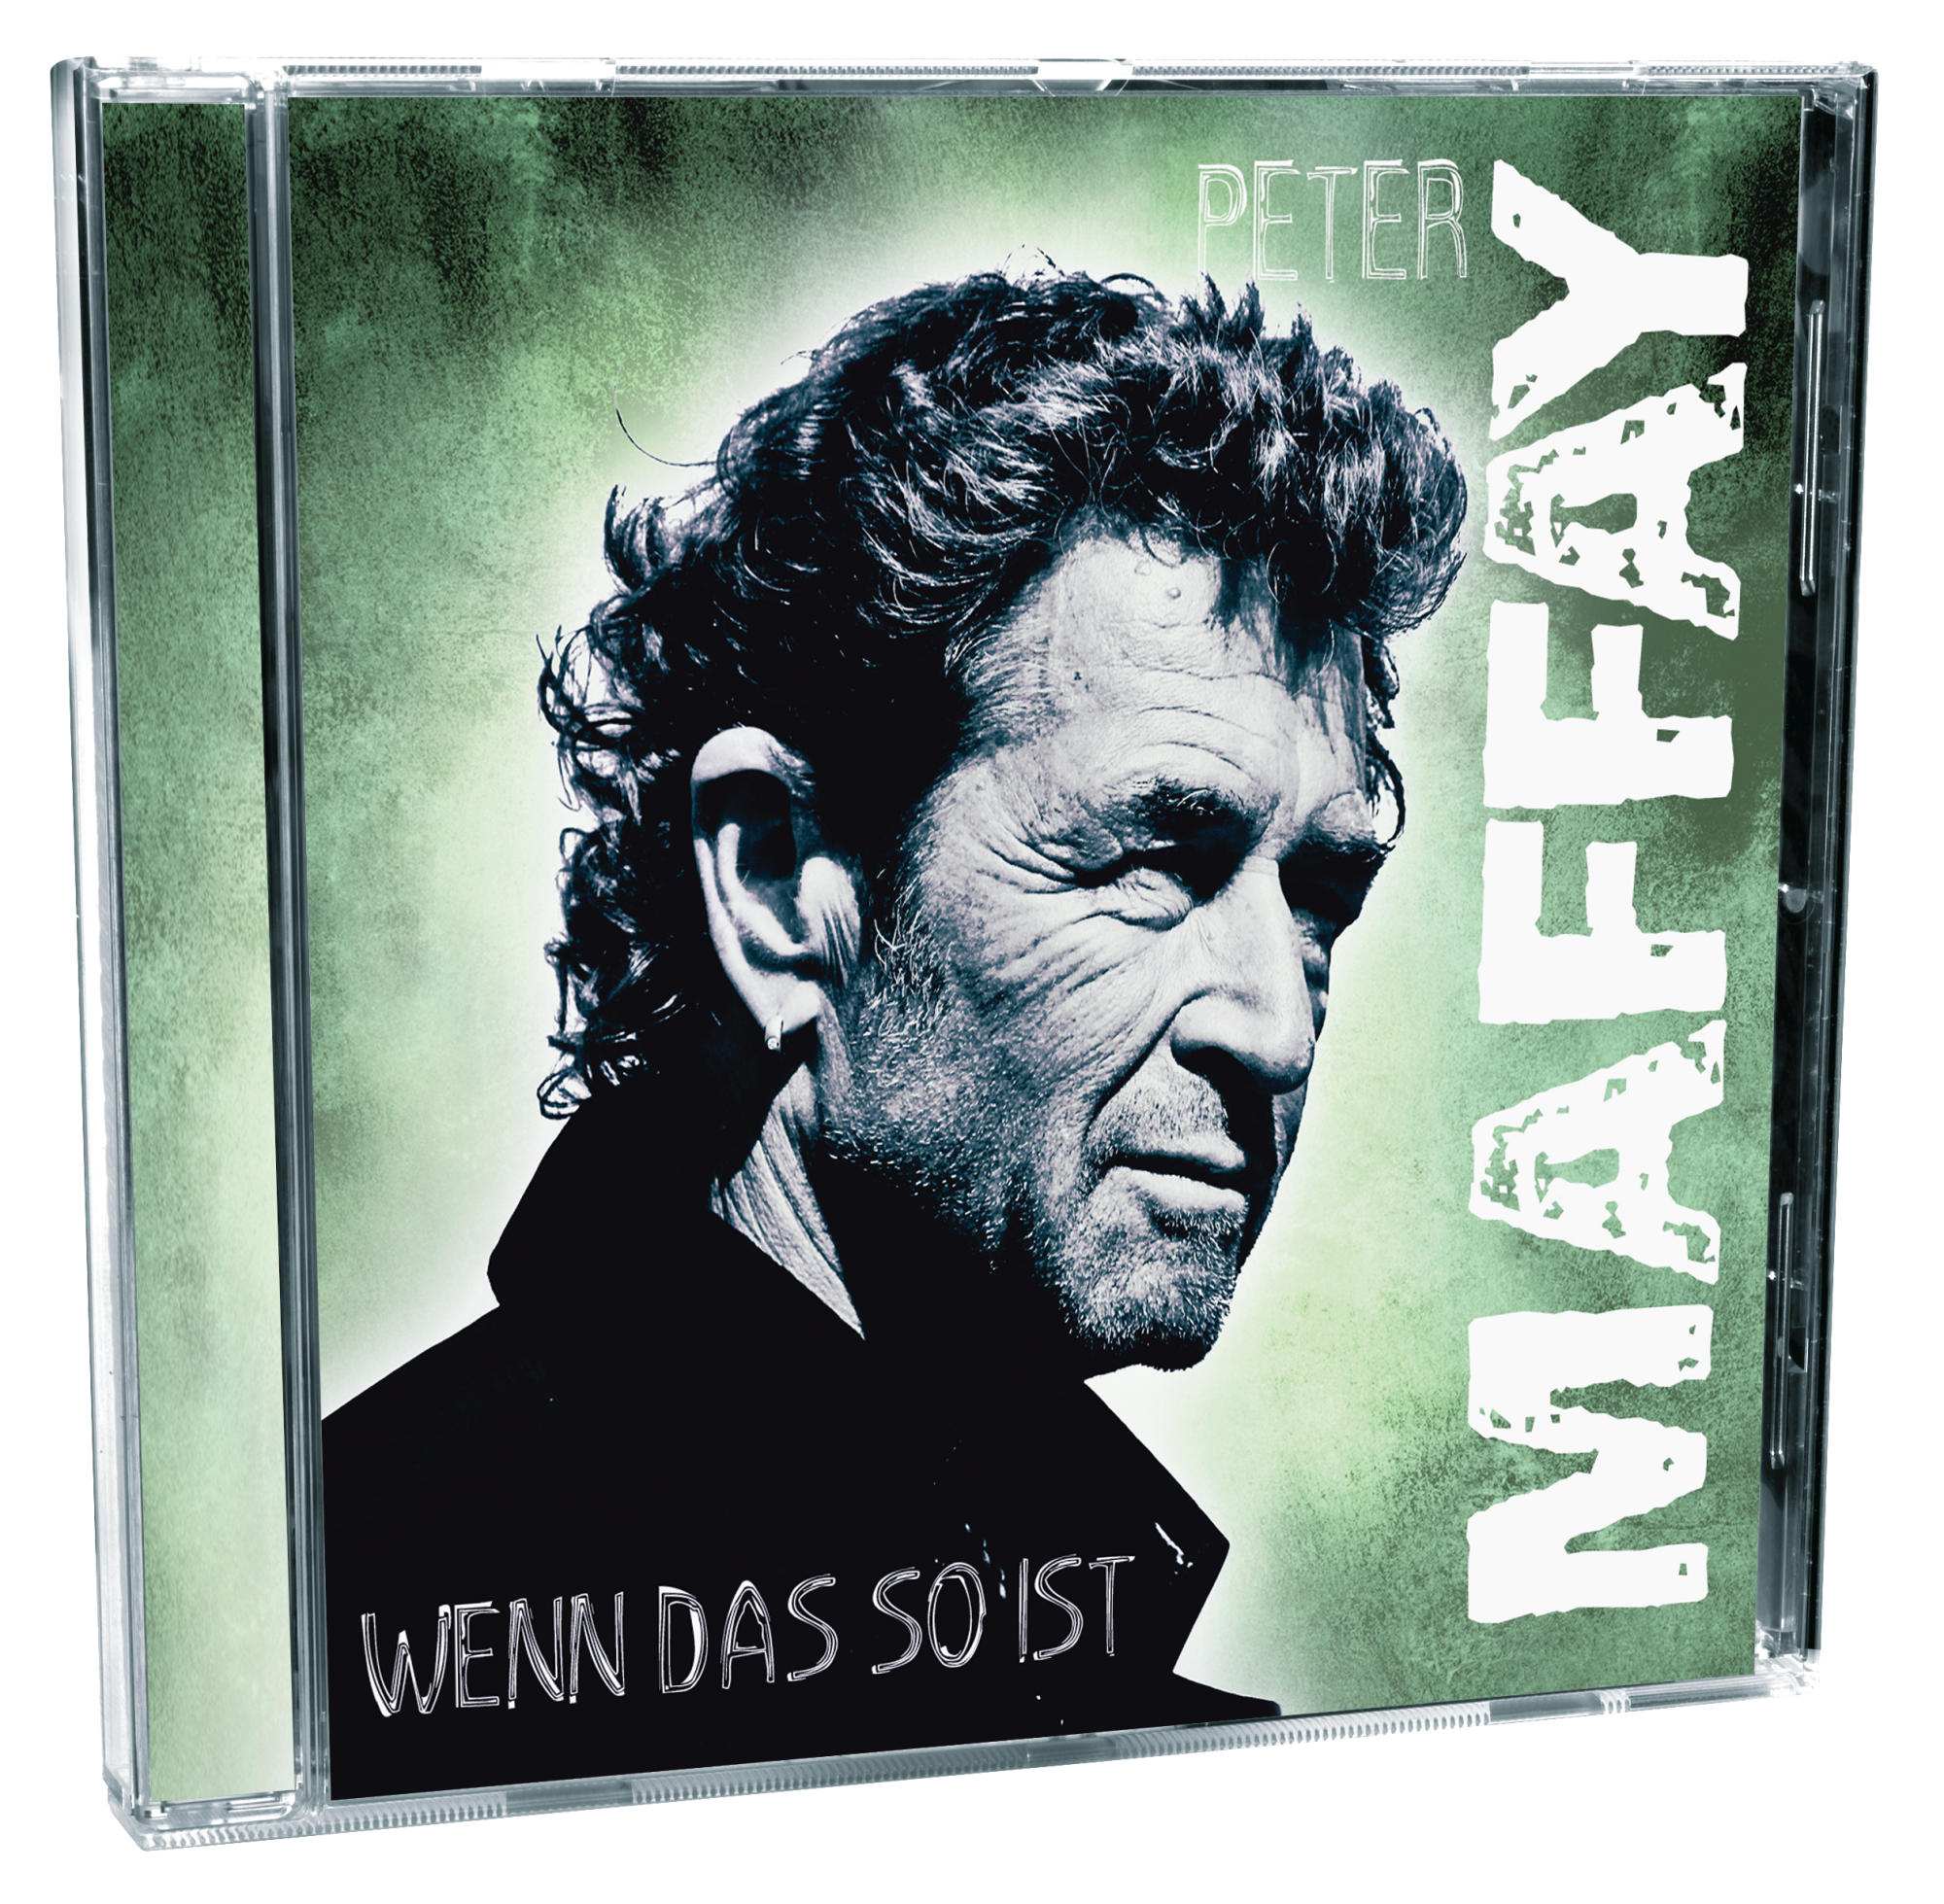 Peter Maffay ist so das - Wenn - (CD)